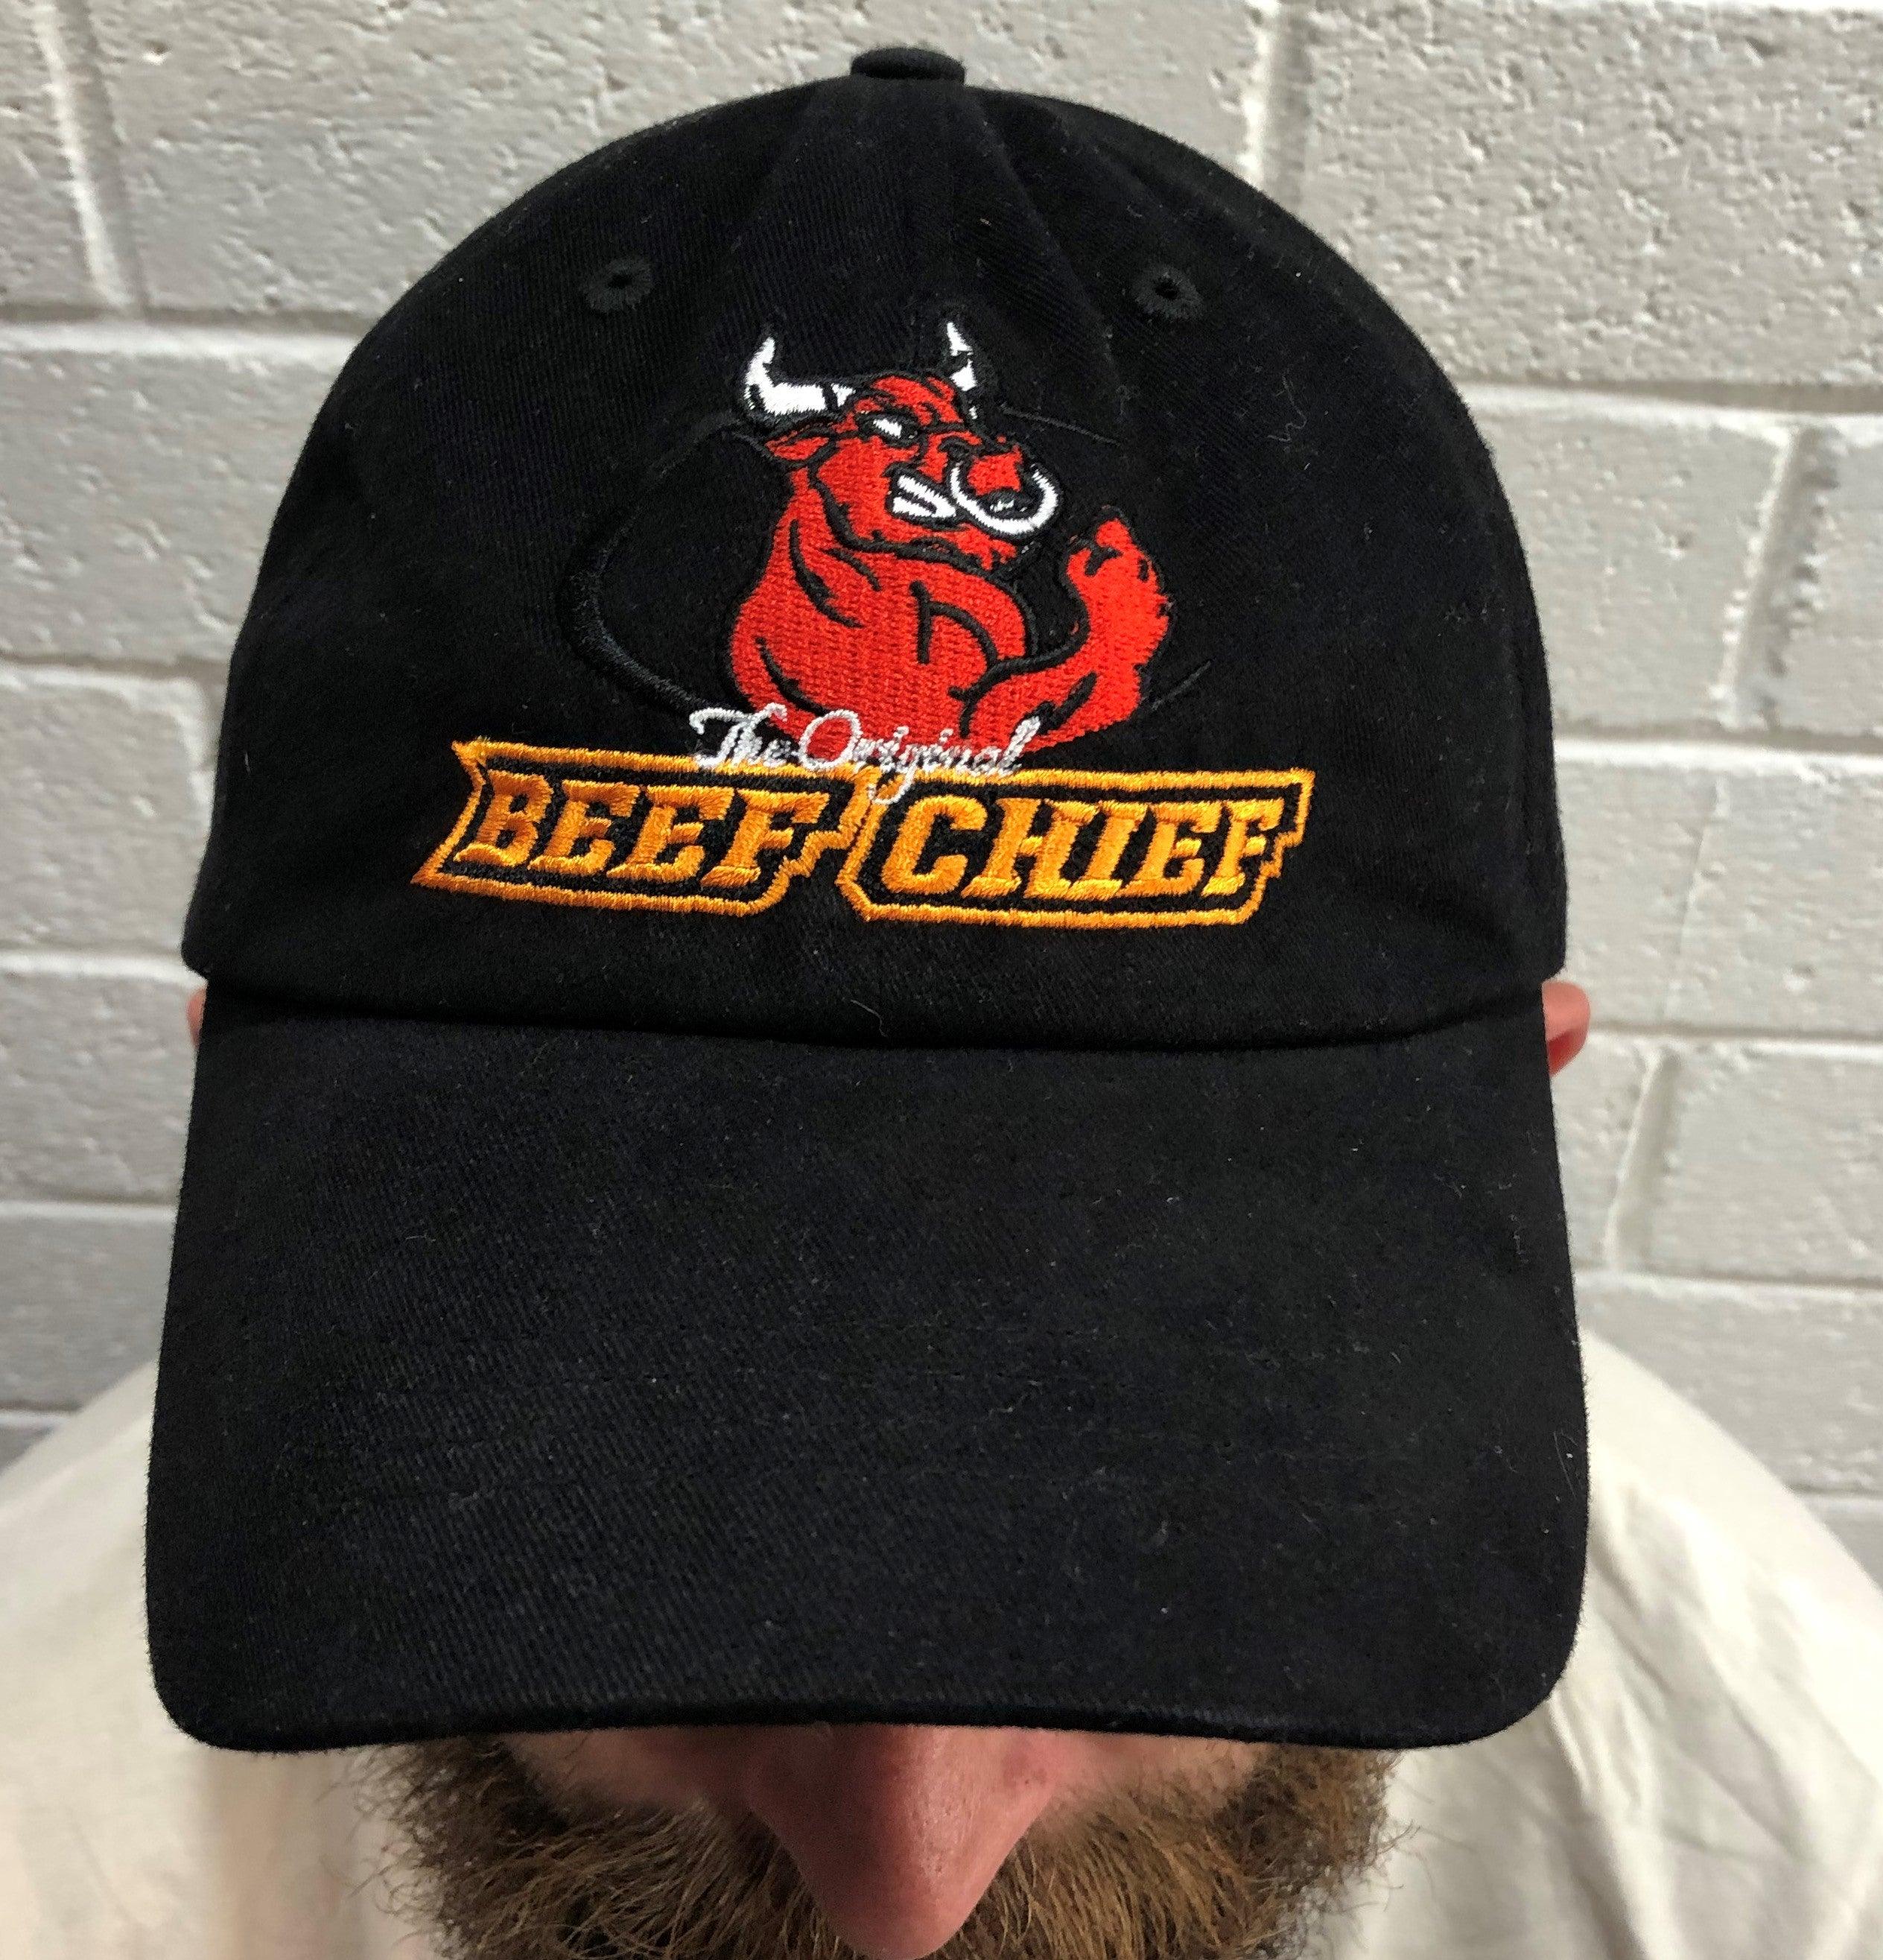 Beef Chief Hat - Original Beef Chief